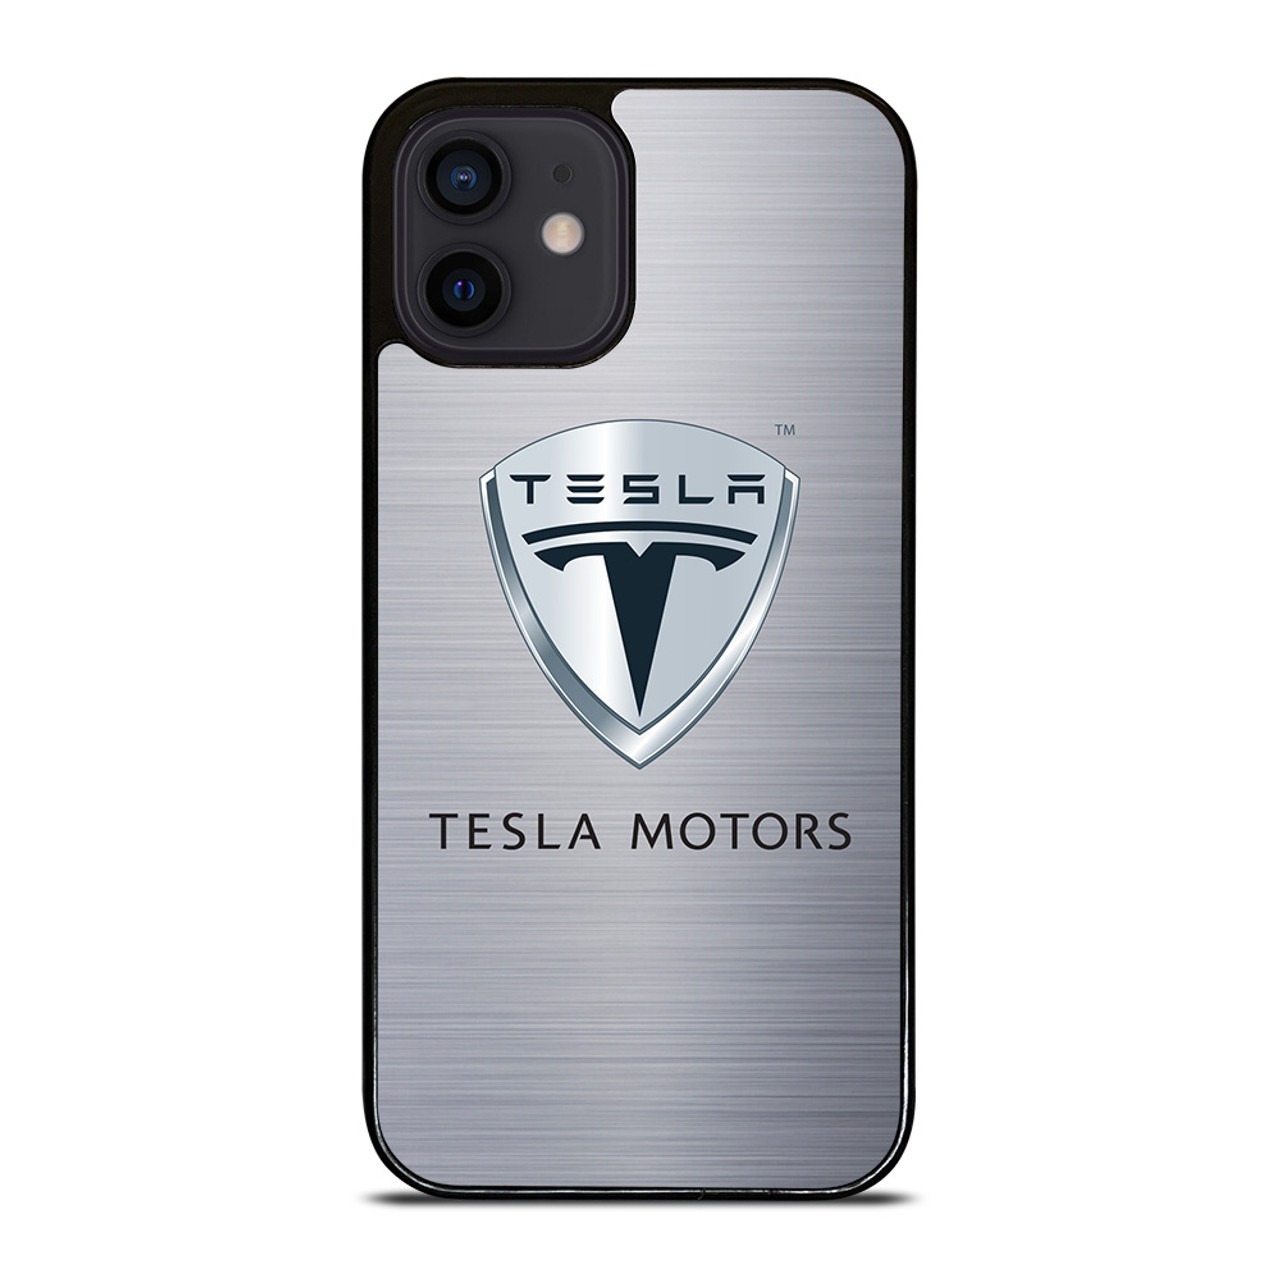 TESLA MOTORS LOGO iPhone 12 Mini Case Cover